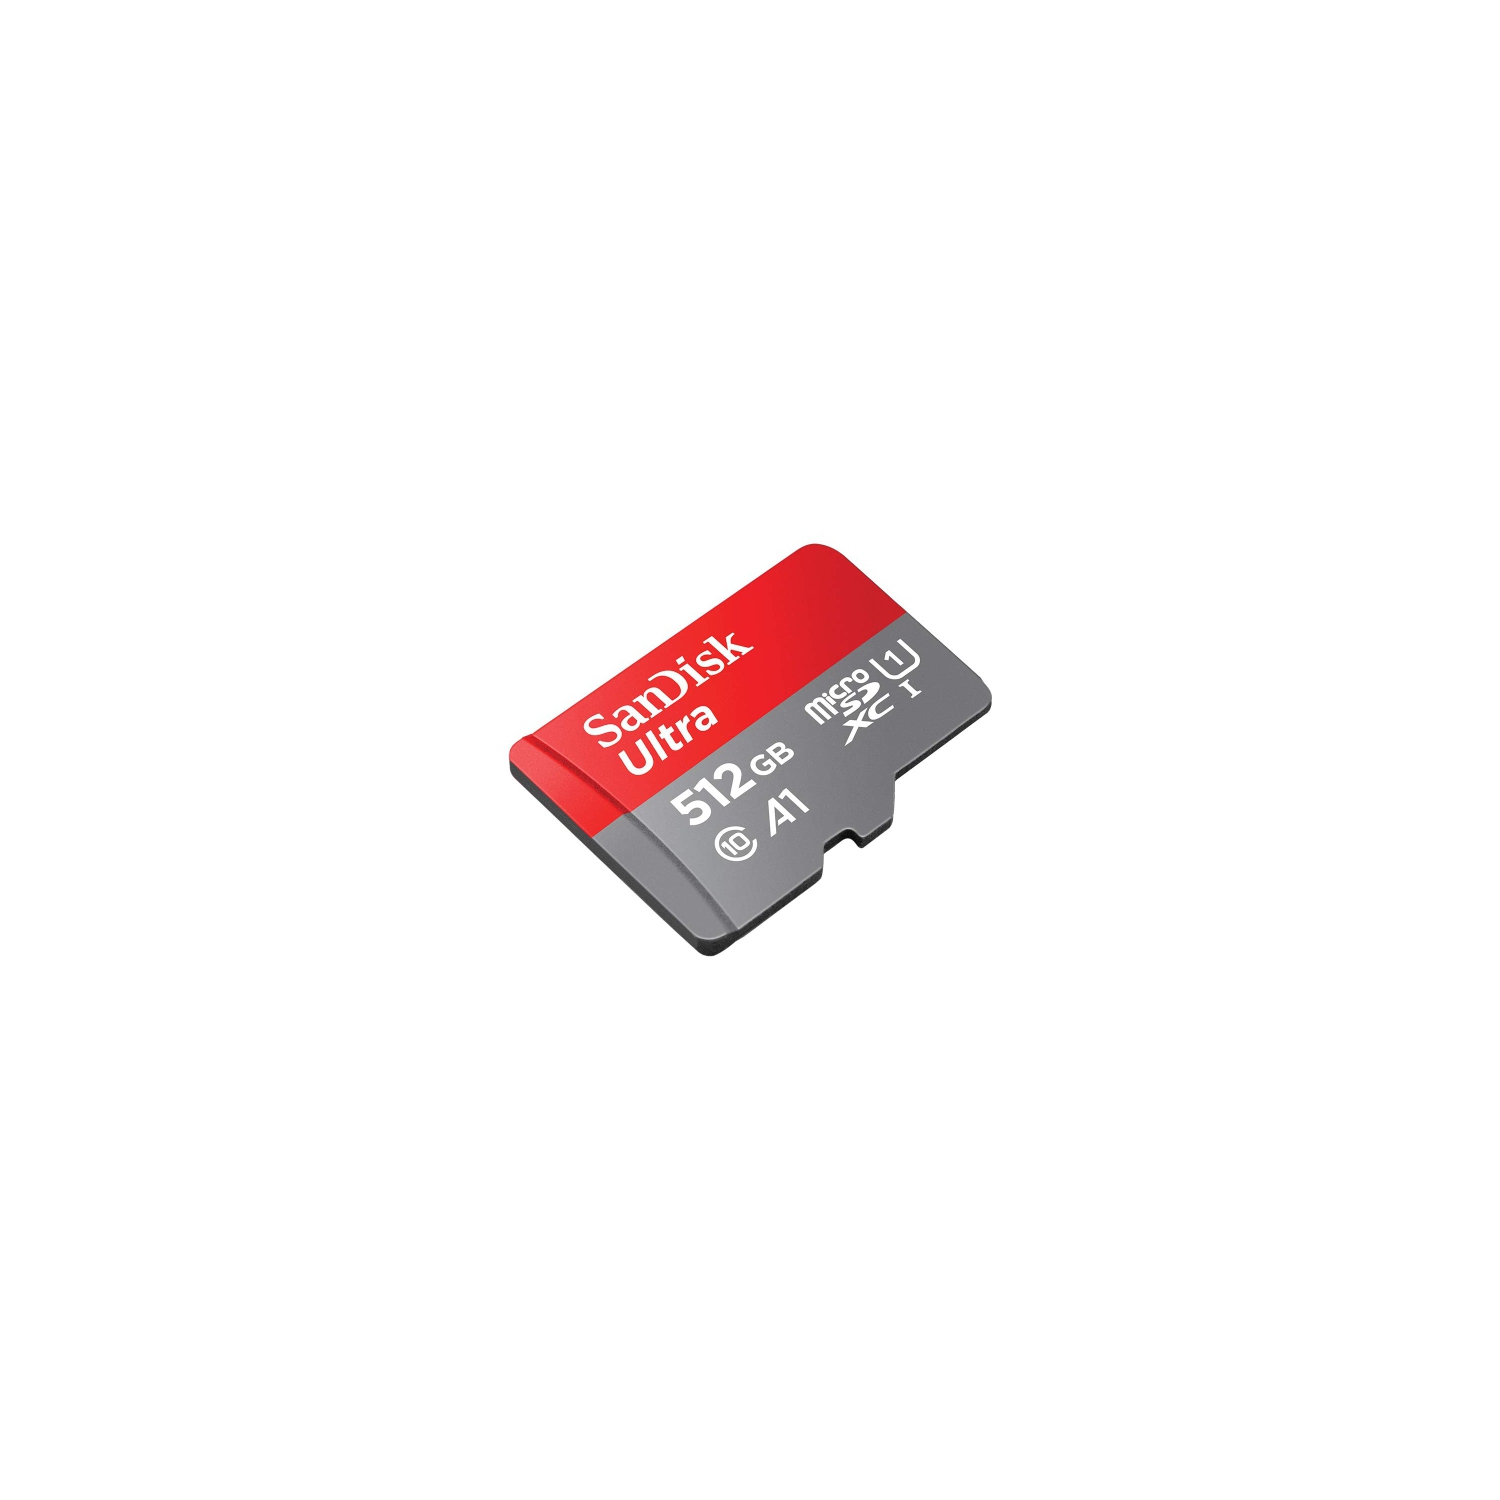 SanDisk Ultra 512GB microSDXC UHS-I micro SD Card SDSQUAR-512G